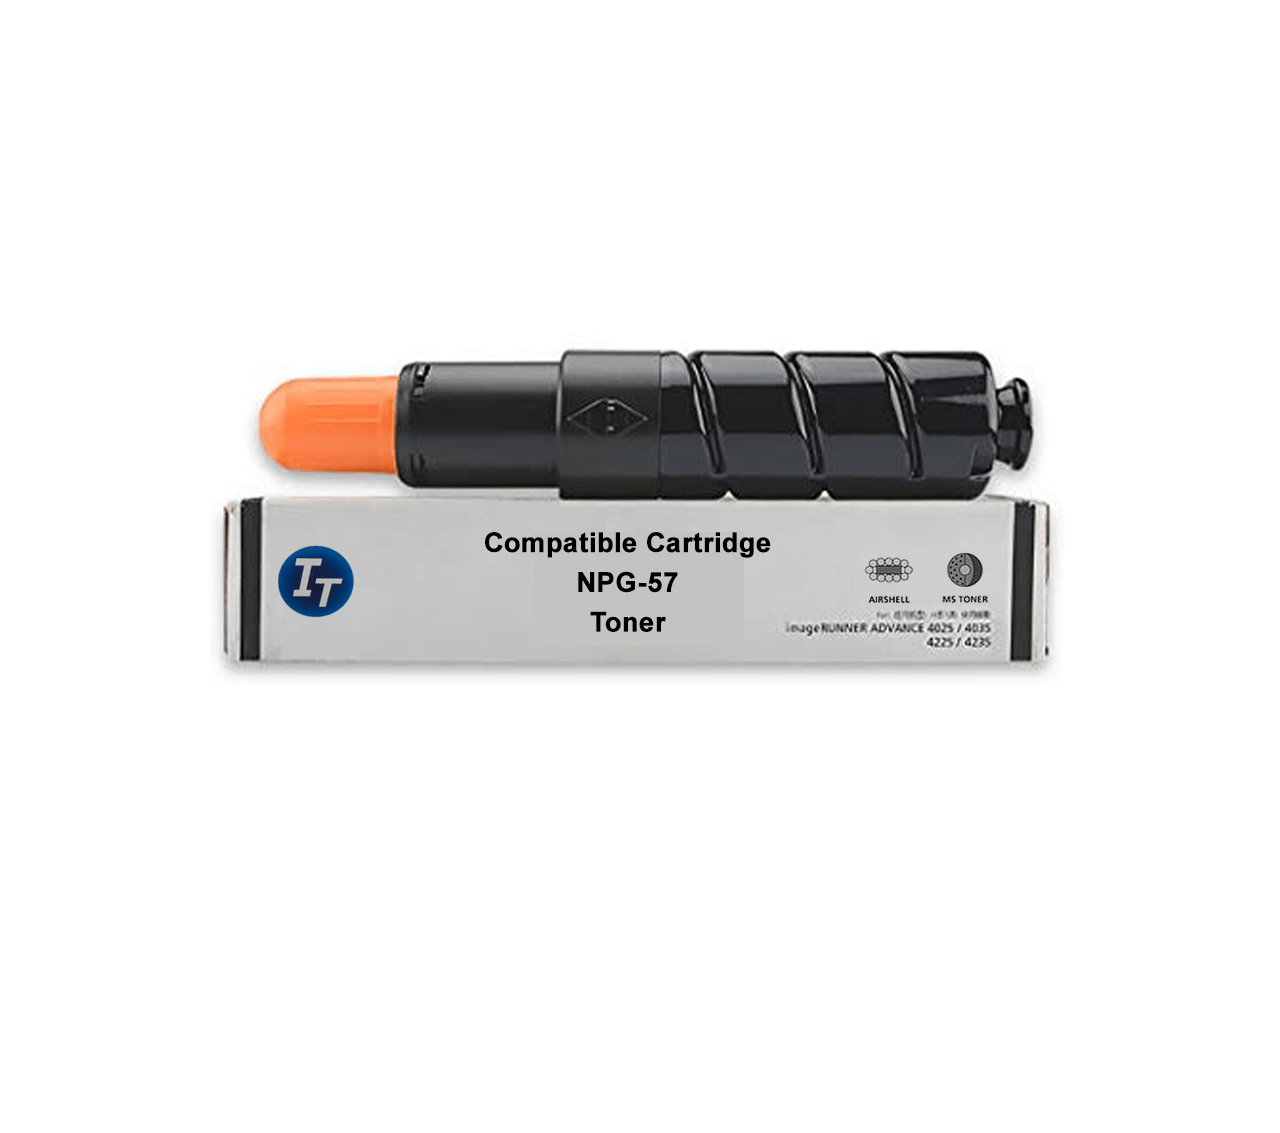 IT Toner Compatible Cartridge NPG-57 (4).png